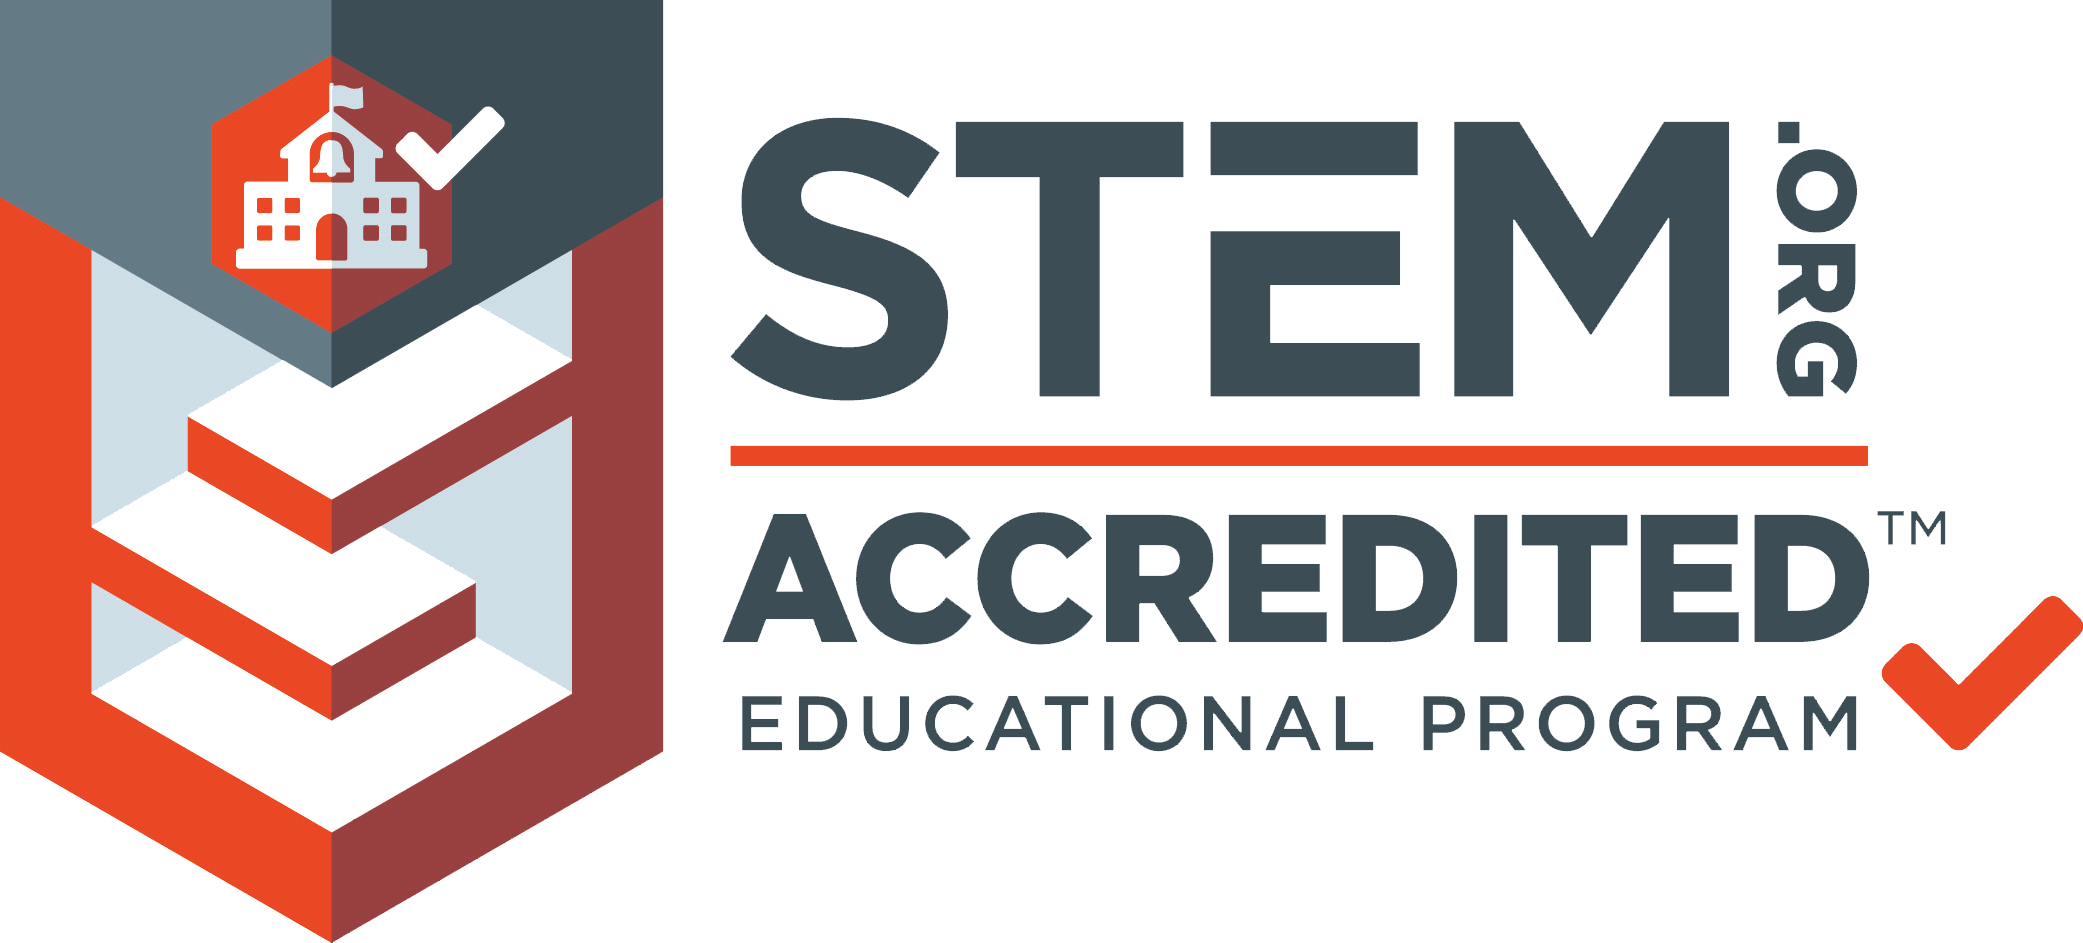 STEM-org_Badge_Accredited_HOS_POS